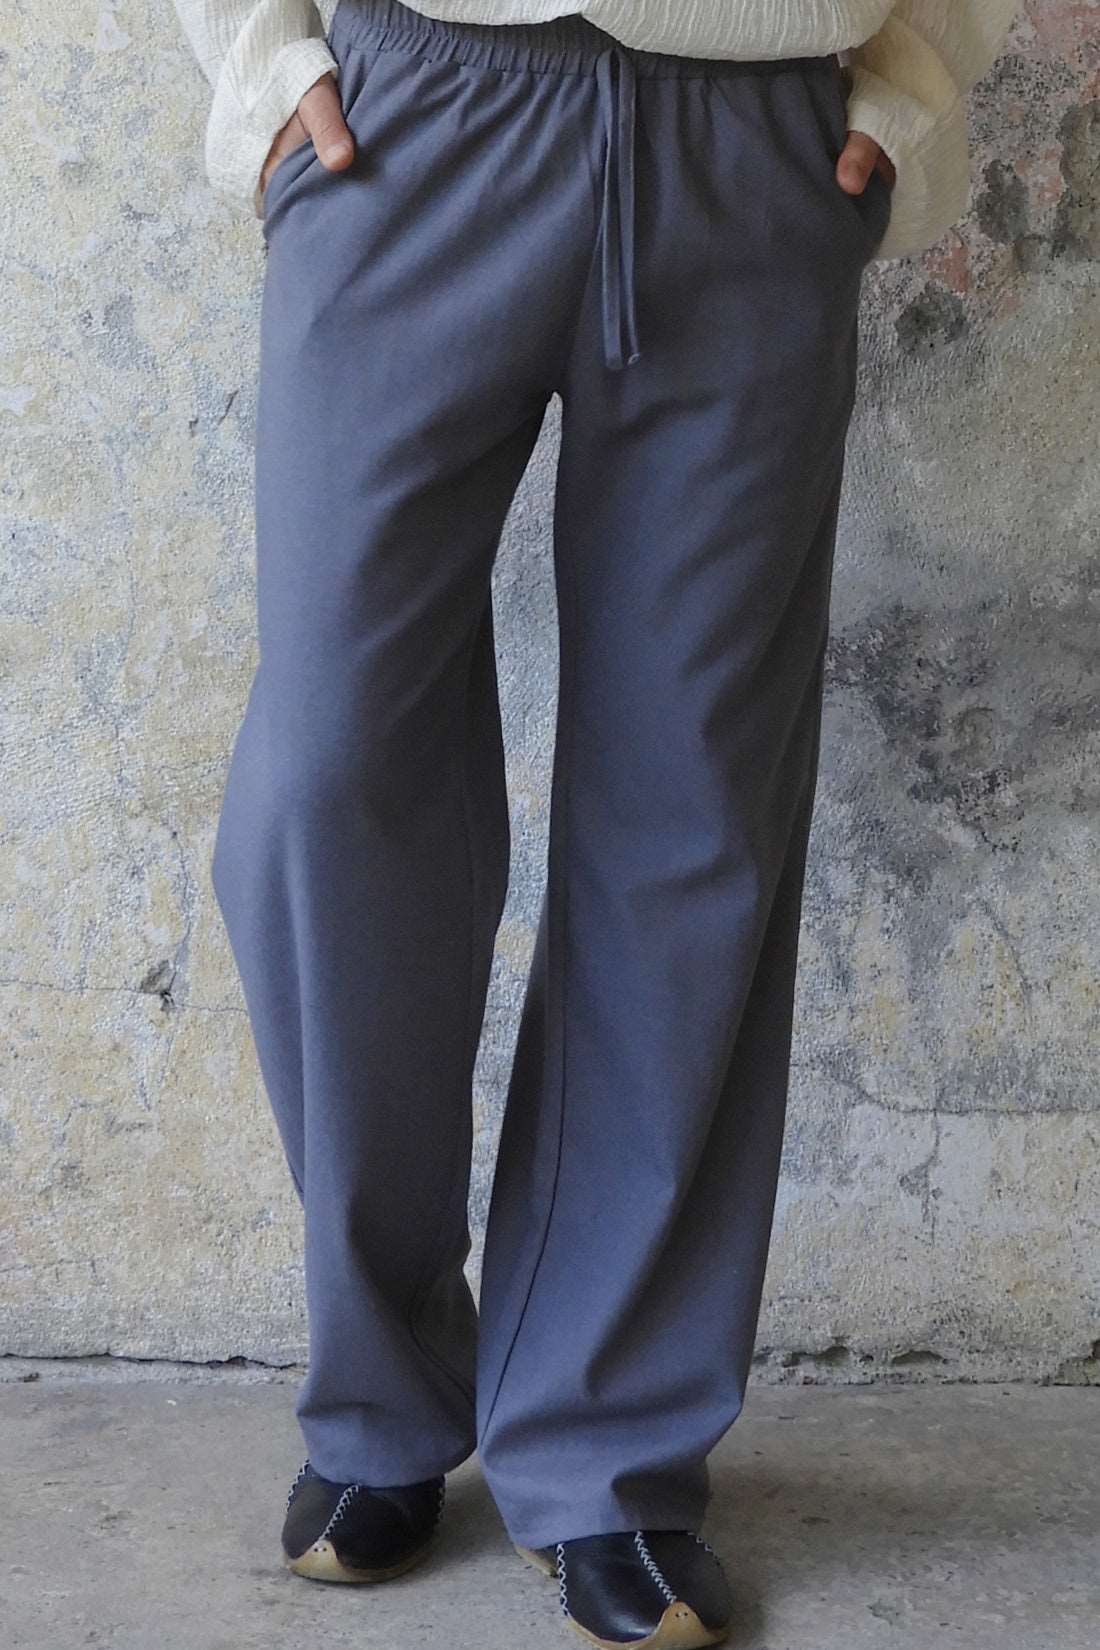 Sustainable  | BEACH Men's Linen Blend Pants (Dark Gray, Indigo Blue) by Odana's